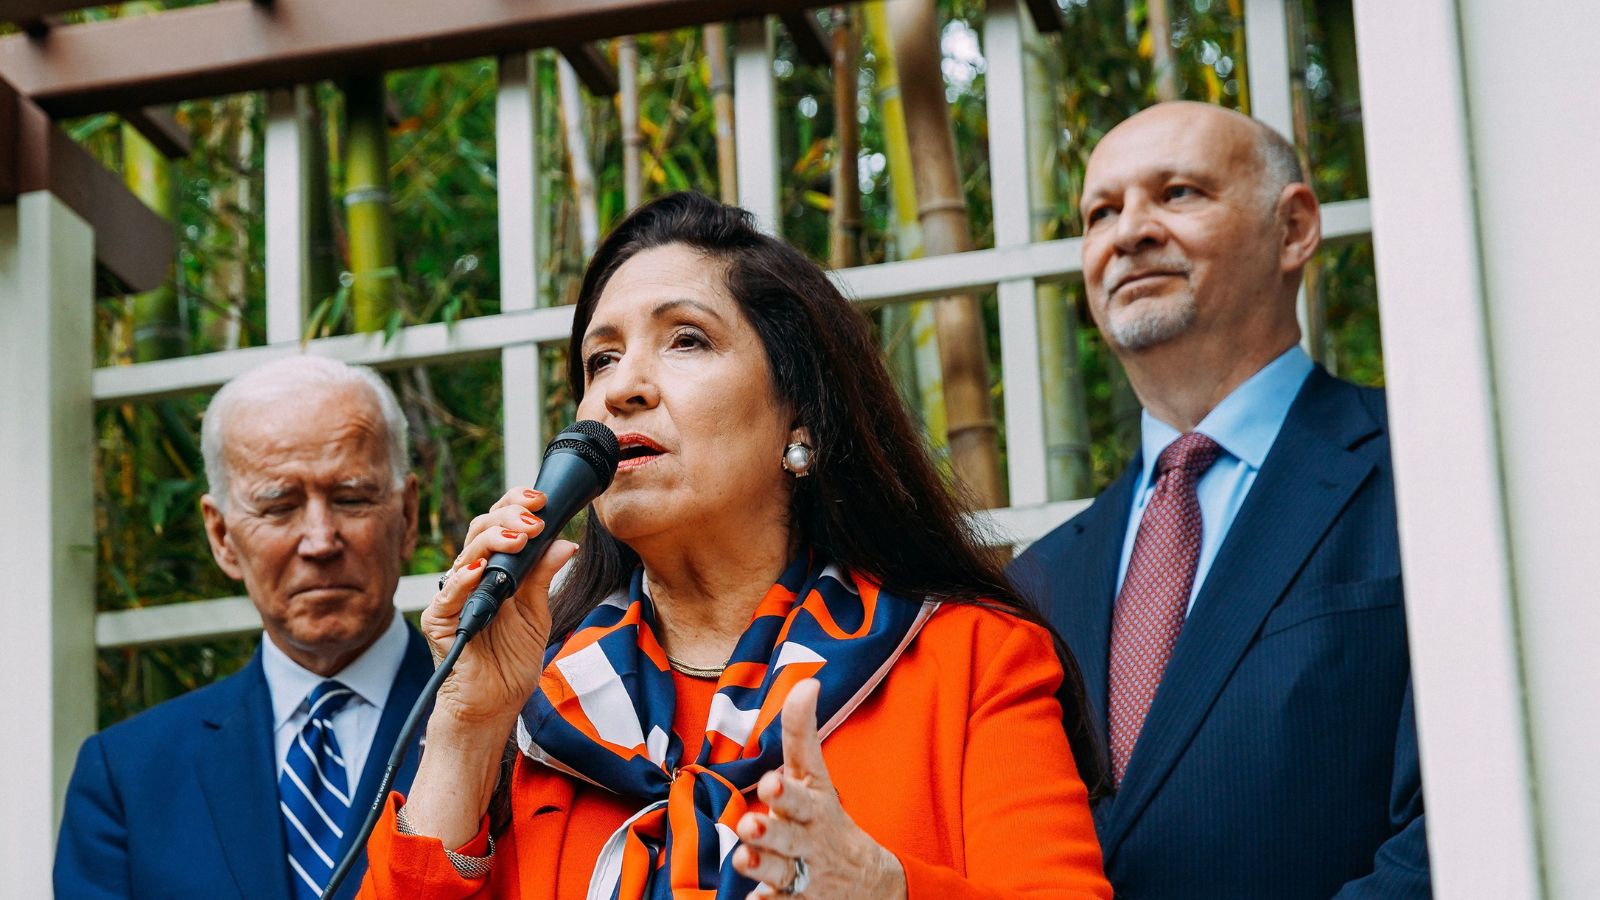 Ambassador Cynthia Telles with her husband Joe Waz and President Biden at Telles’ home in May 2019.